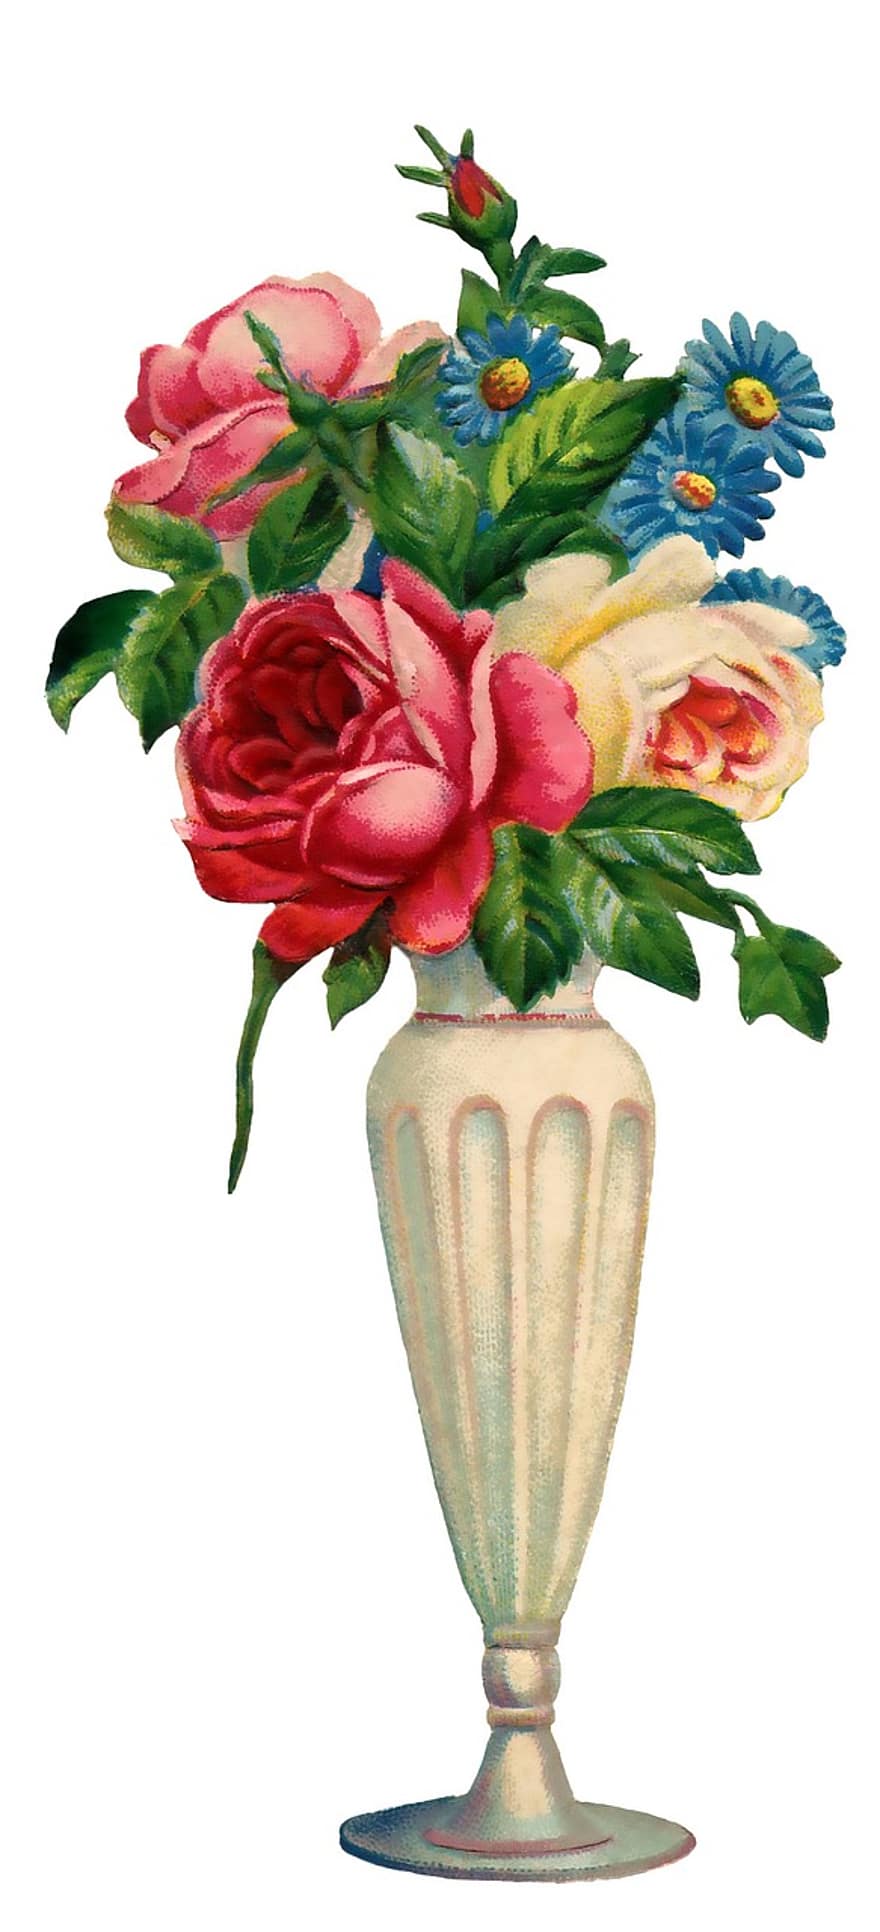 Vintage, Flowers, Vase, Vase Or Flowers, Roses, Victorian, Old, Scrap, Scrapbooking, Art, Isolated